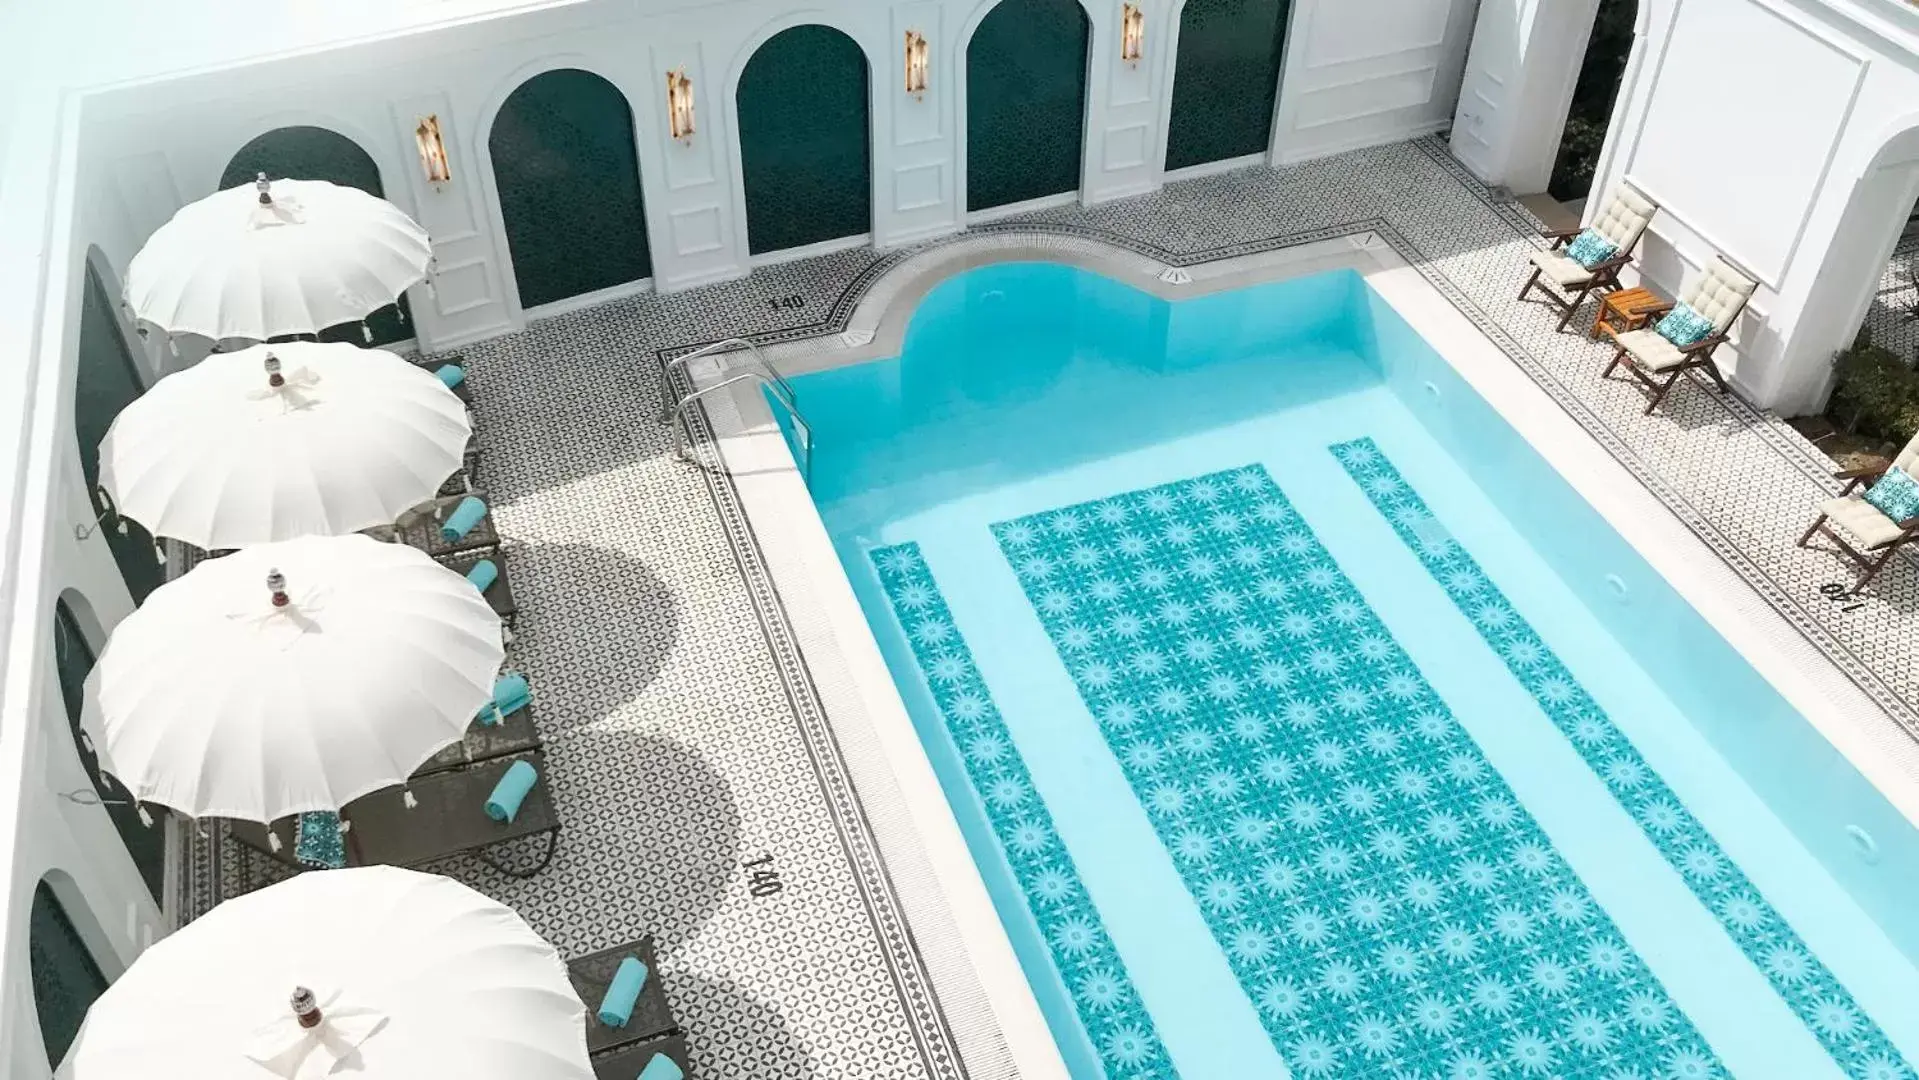 Pool View in Sura Hagia Sophia Hotel